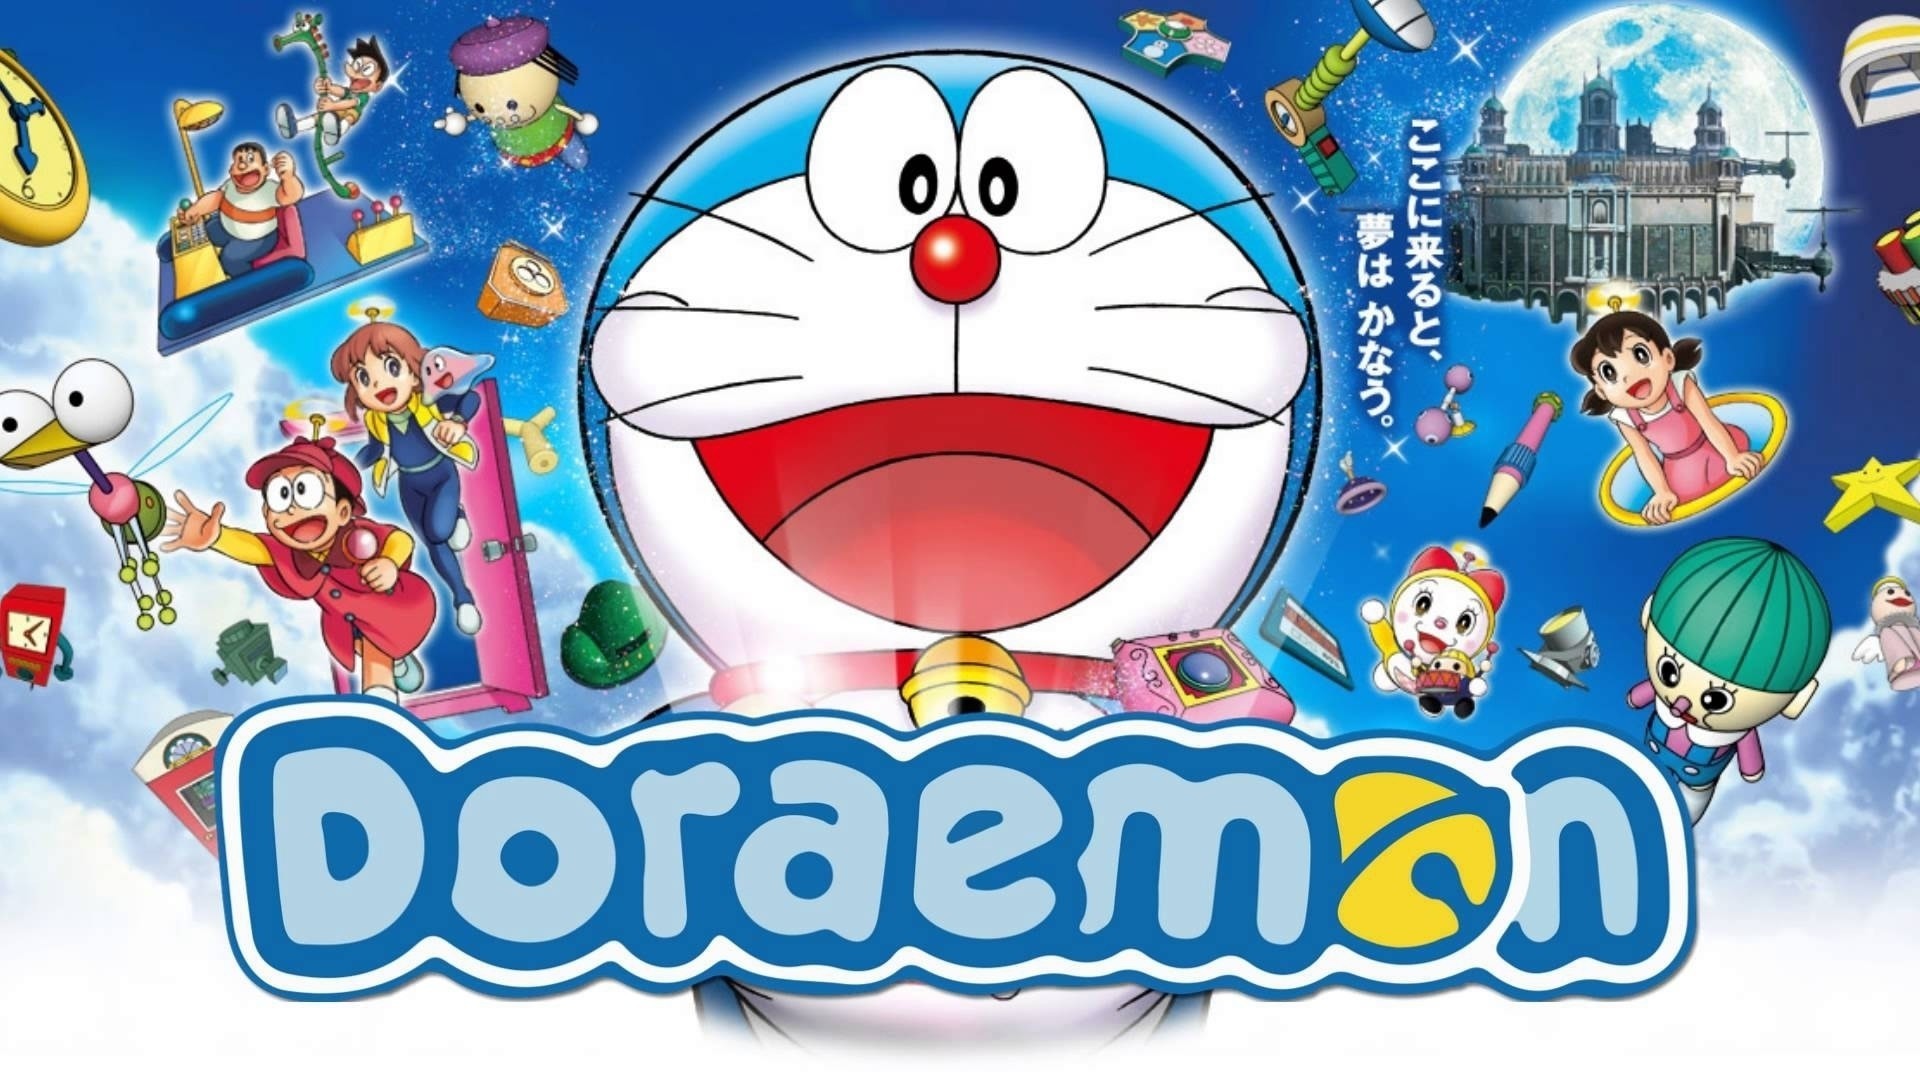  Wallpaper  Doraemon  Dora Emon  Gambar Doraemon  Lucu  Dan  Imut  